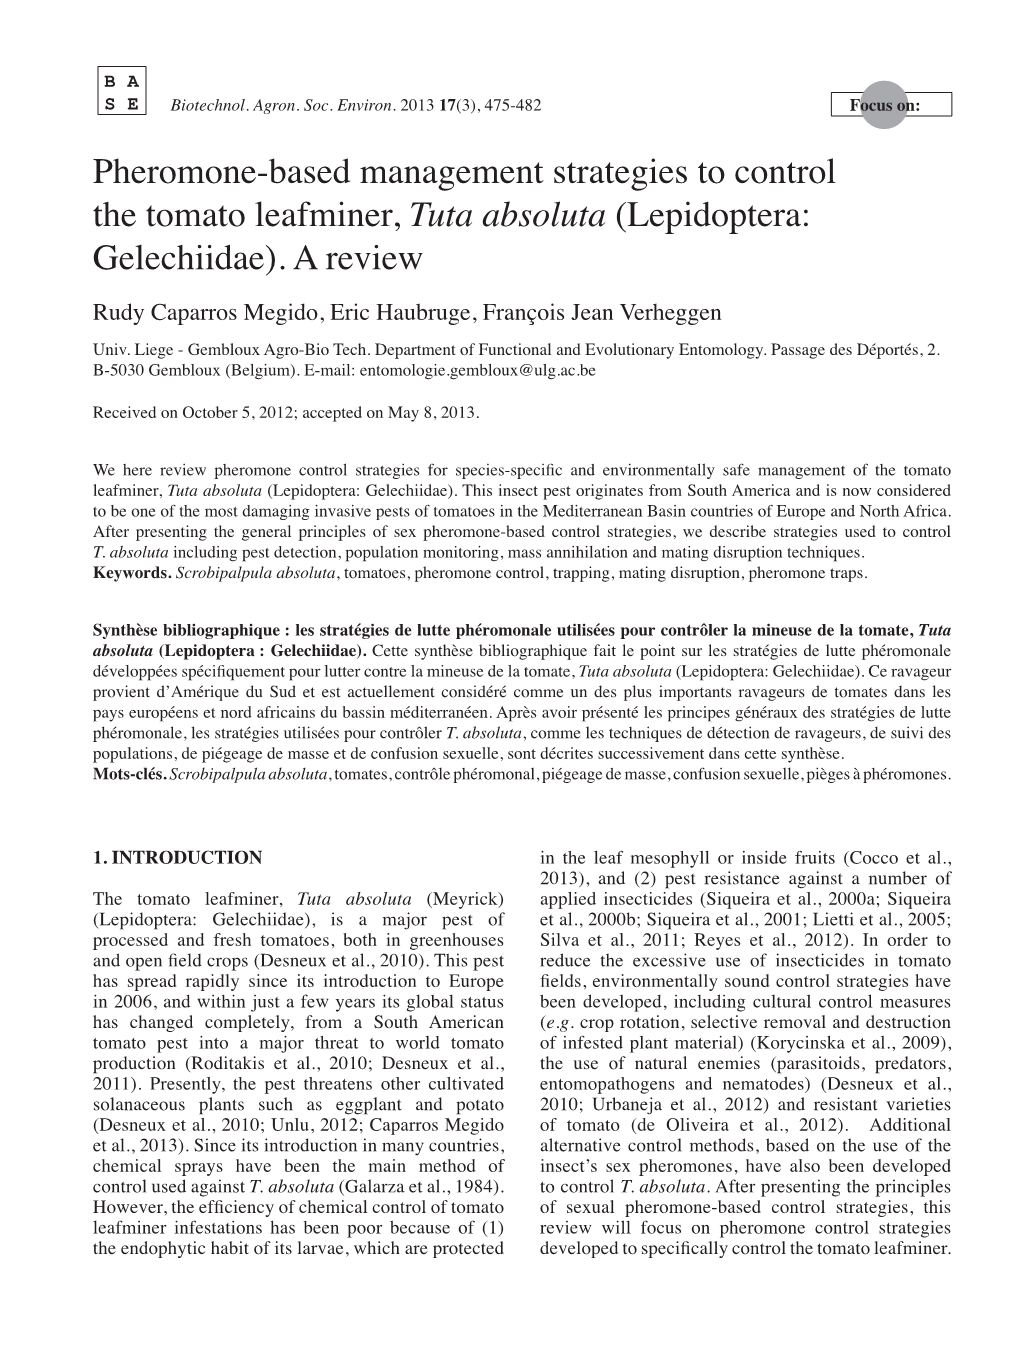 Pheromone-Based Management Strategies to Control the Tomato Leafminer, Tuta Absoluta (Lepidoptera: Gelechiidae)